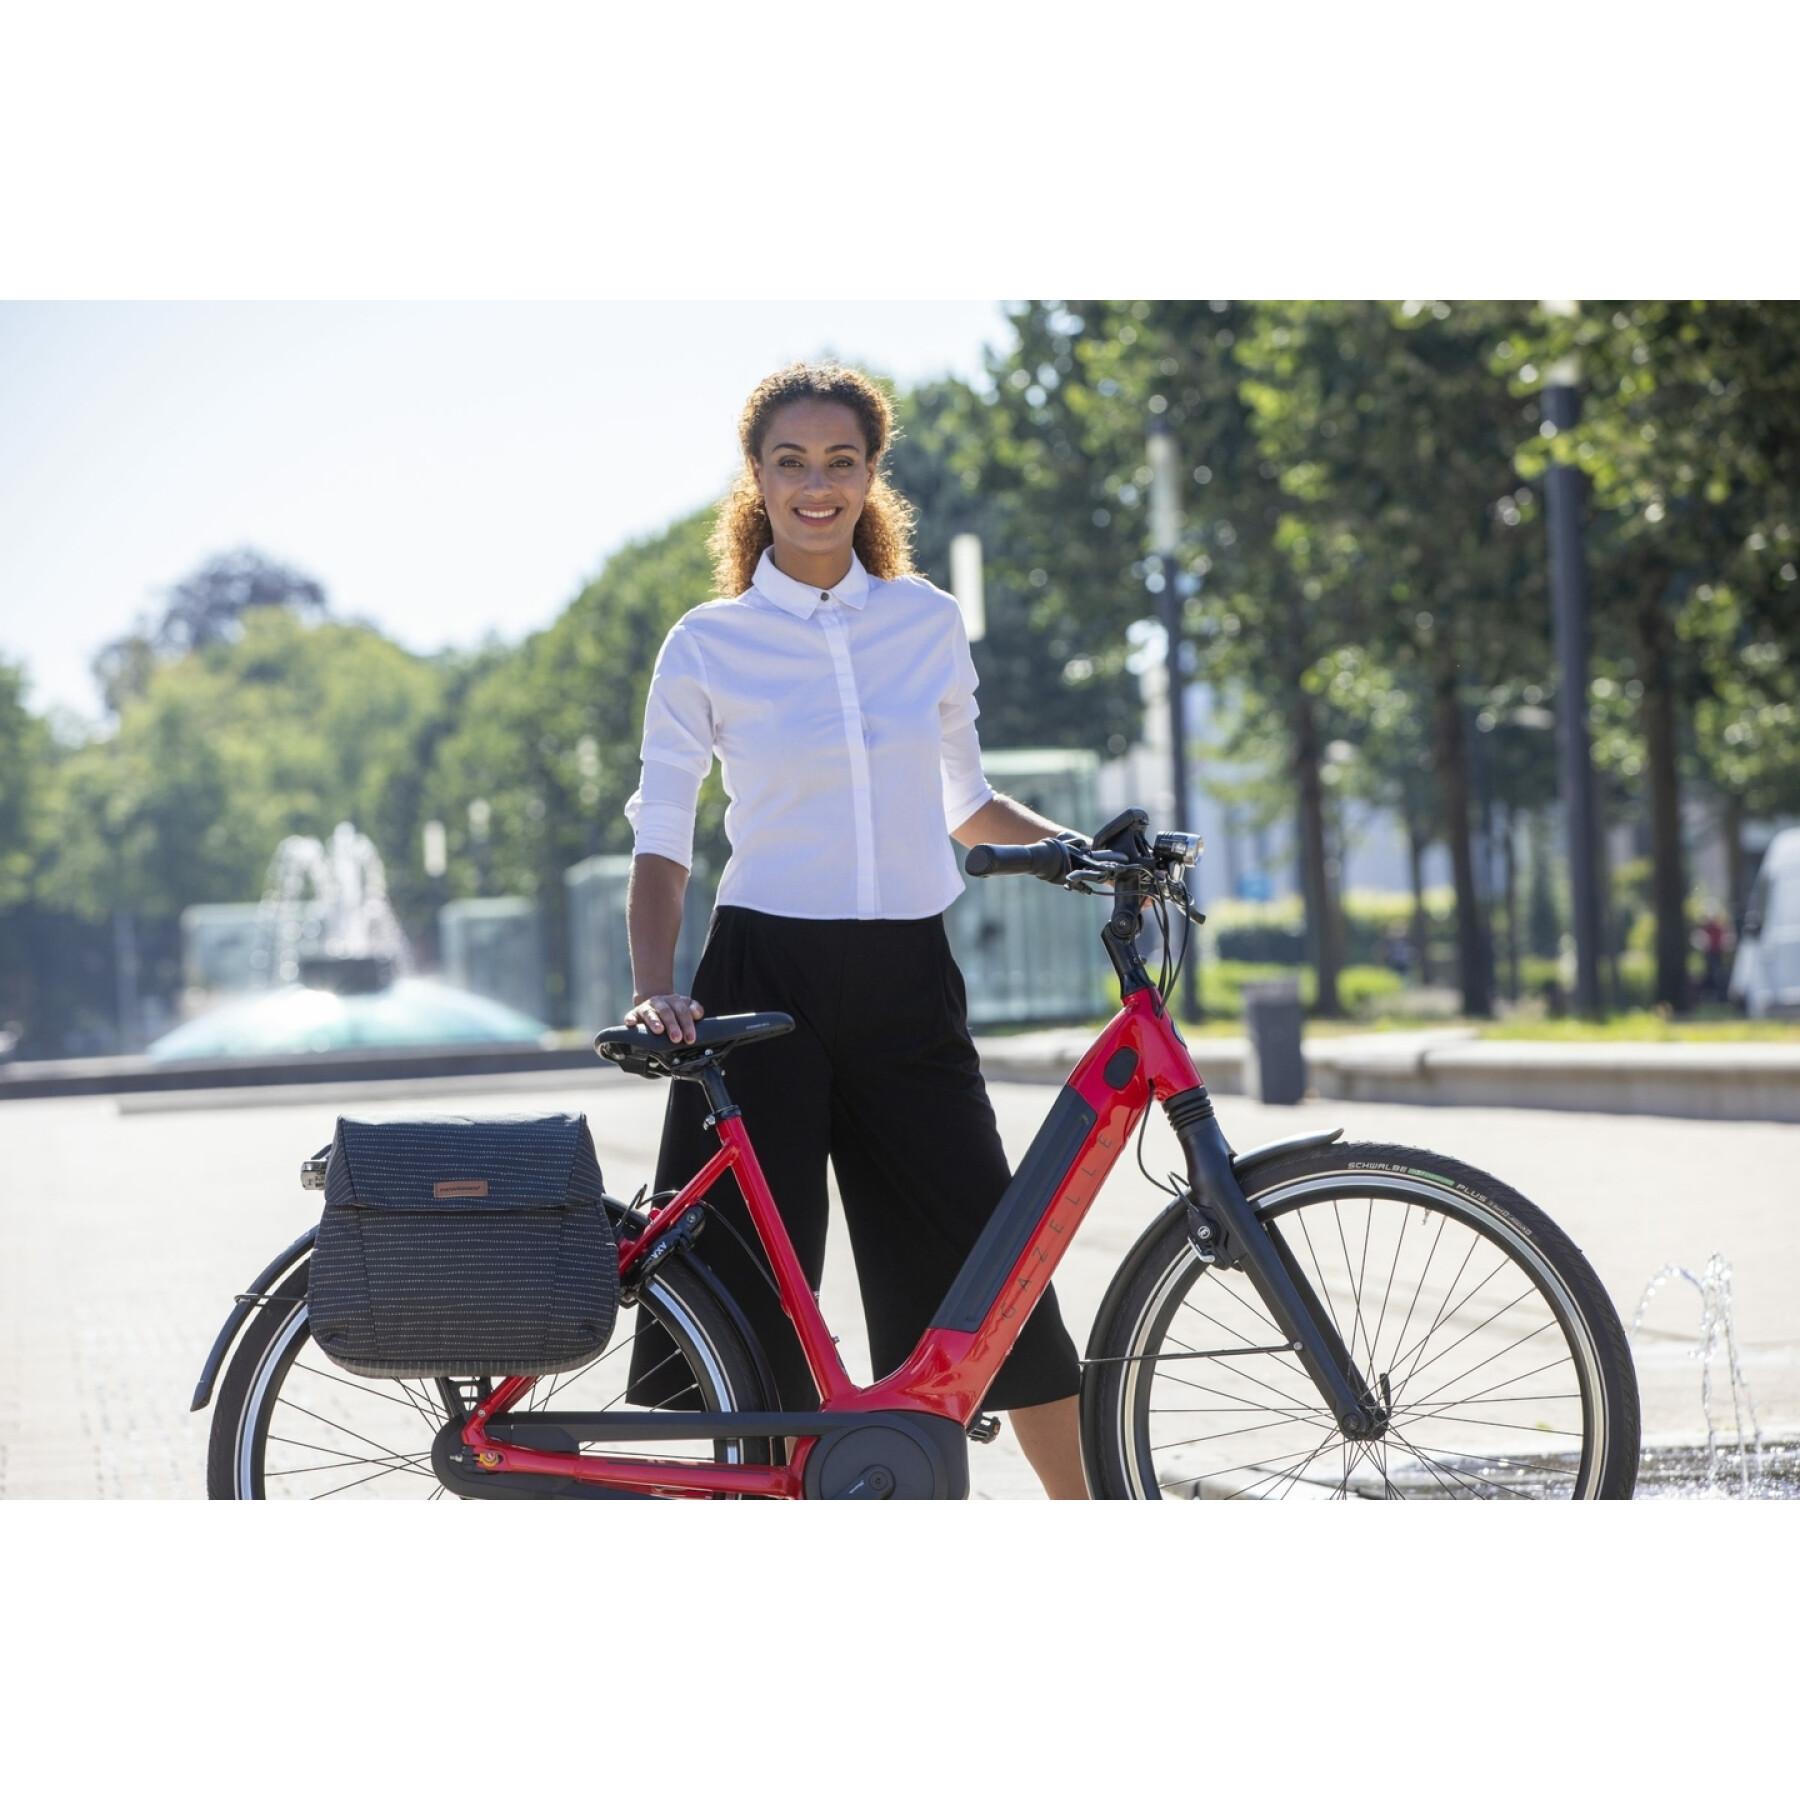 Sacoche porte-bagage vélo imperméable en polyester avec réfléchissants New Looxs Joli Nomi